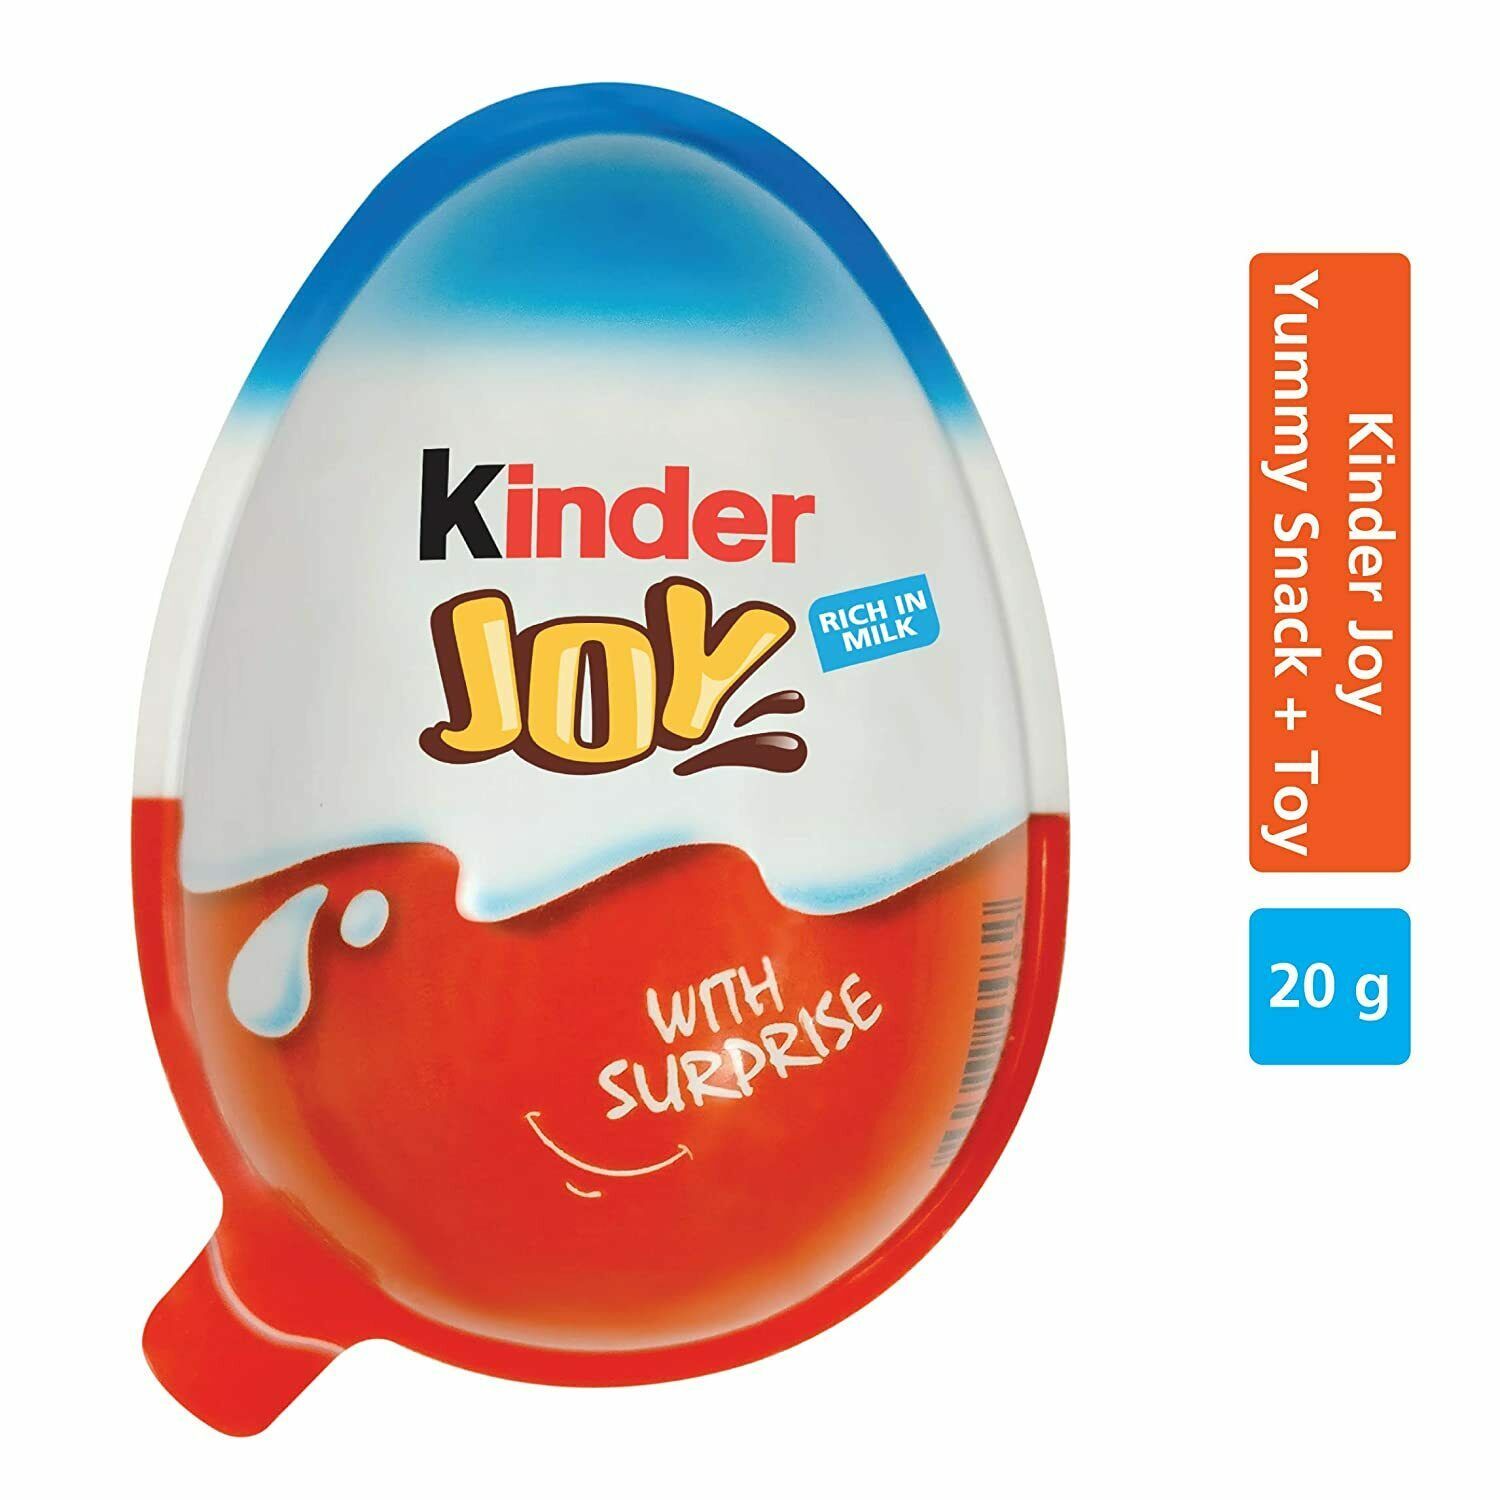 Kinder Joy Chocolates for Boys, 20g